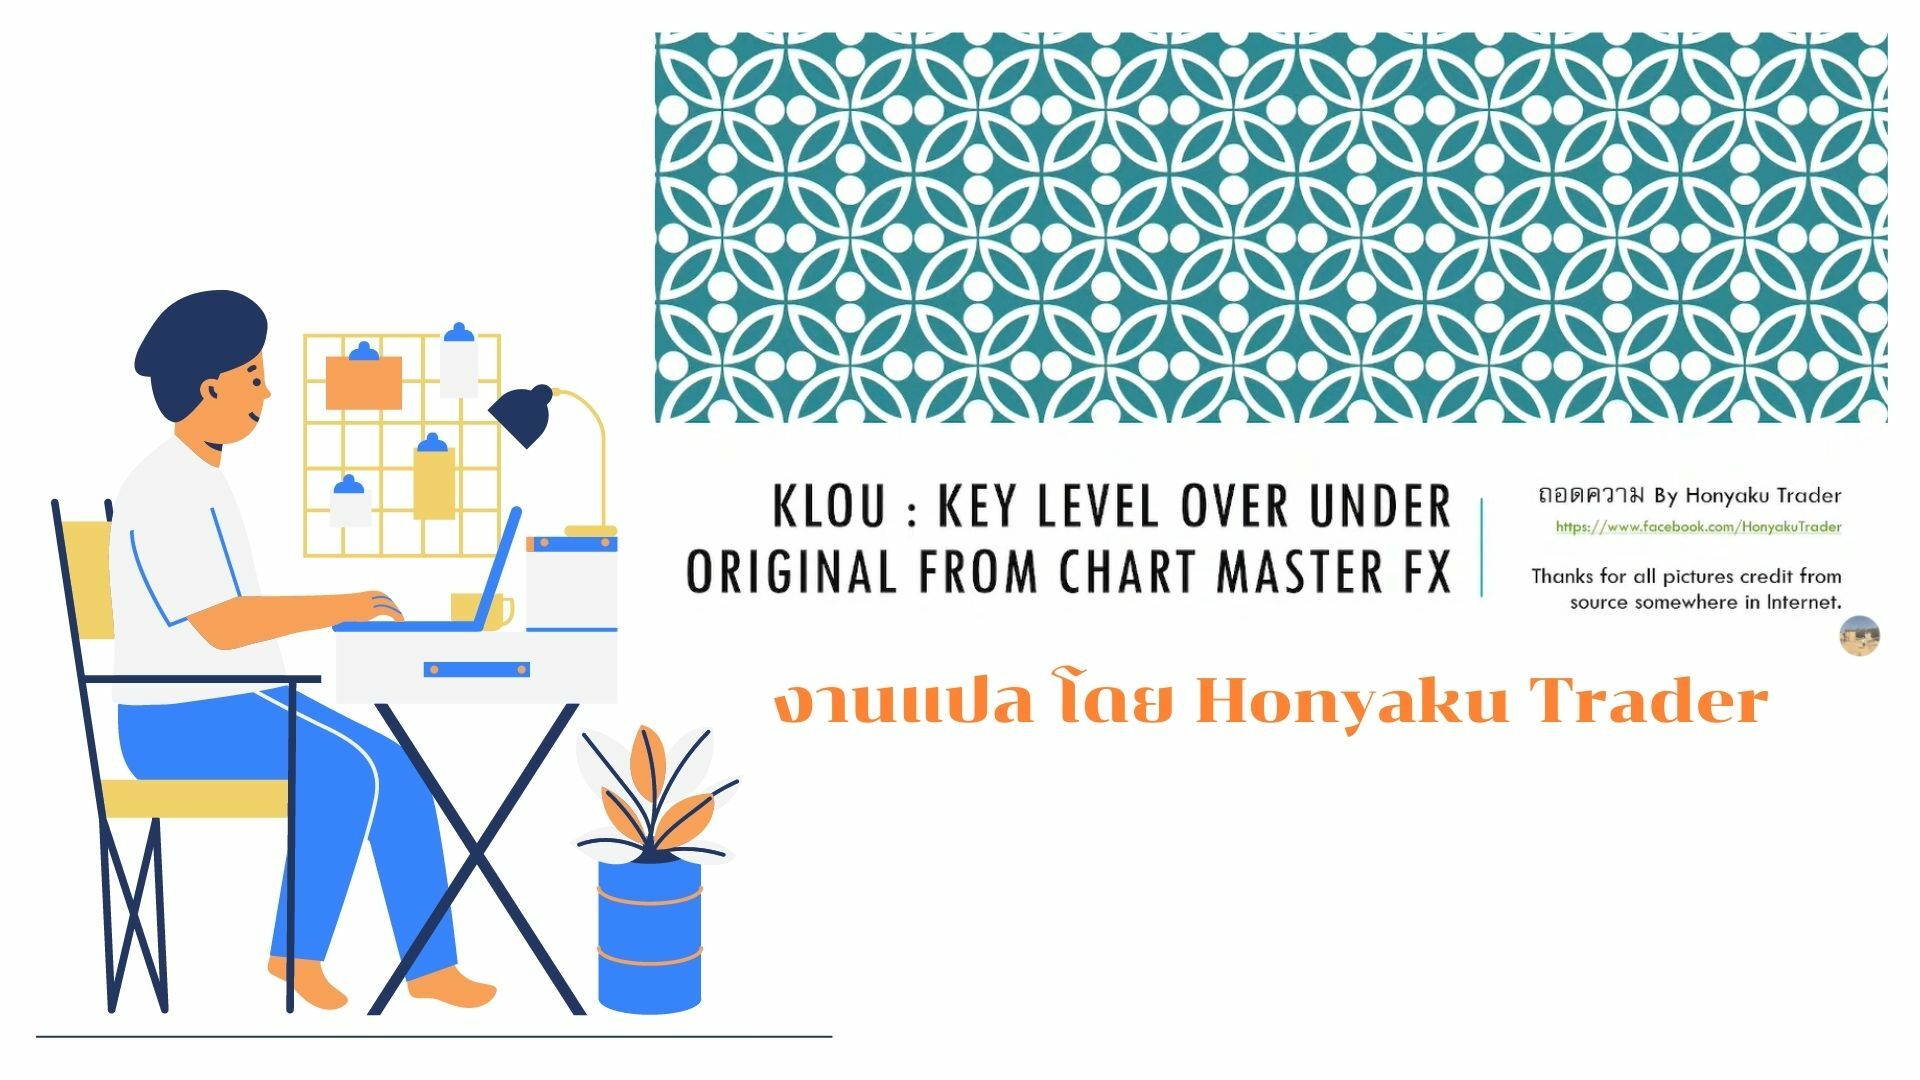 KLOU = Key Level Over Under